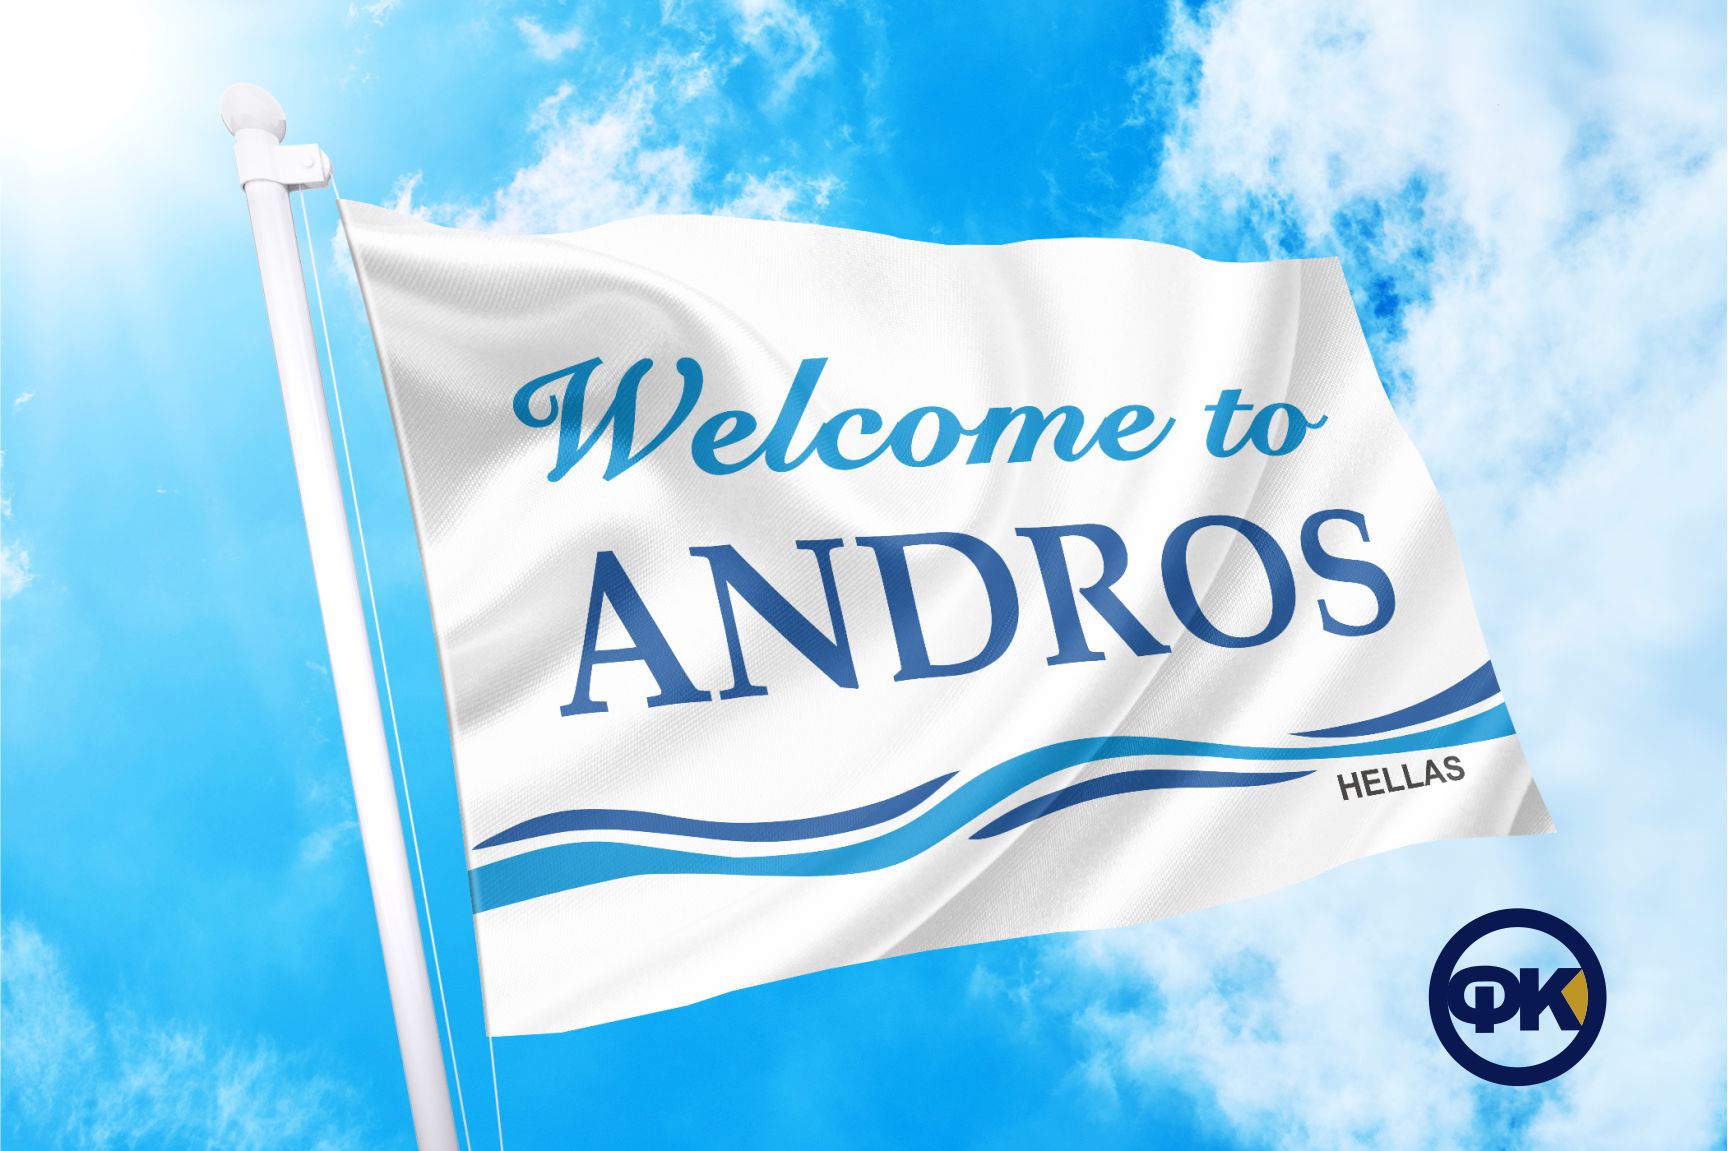 ANDROS WELCOME FLAG COCONIS FLAGS ΣΗΜΑΙΕΣ ΚΟΚΚΩΝΗΣ ΑΓΟΡΑ ΤΙΜΗ